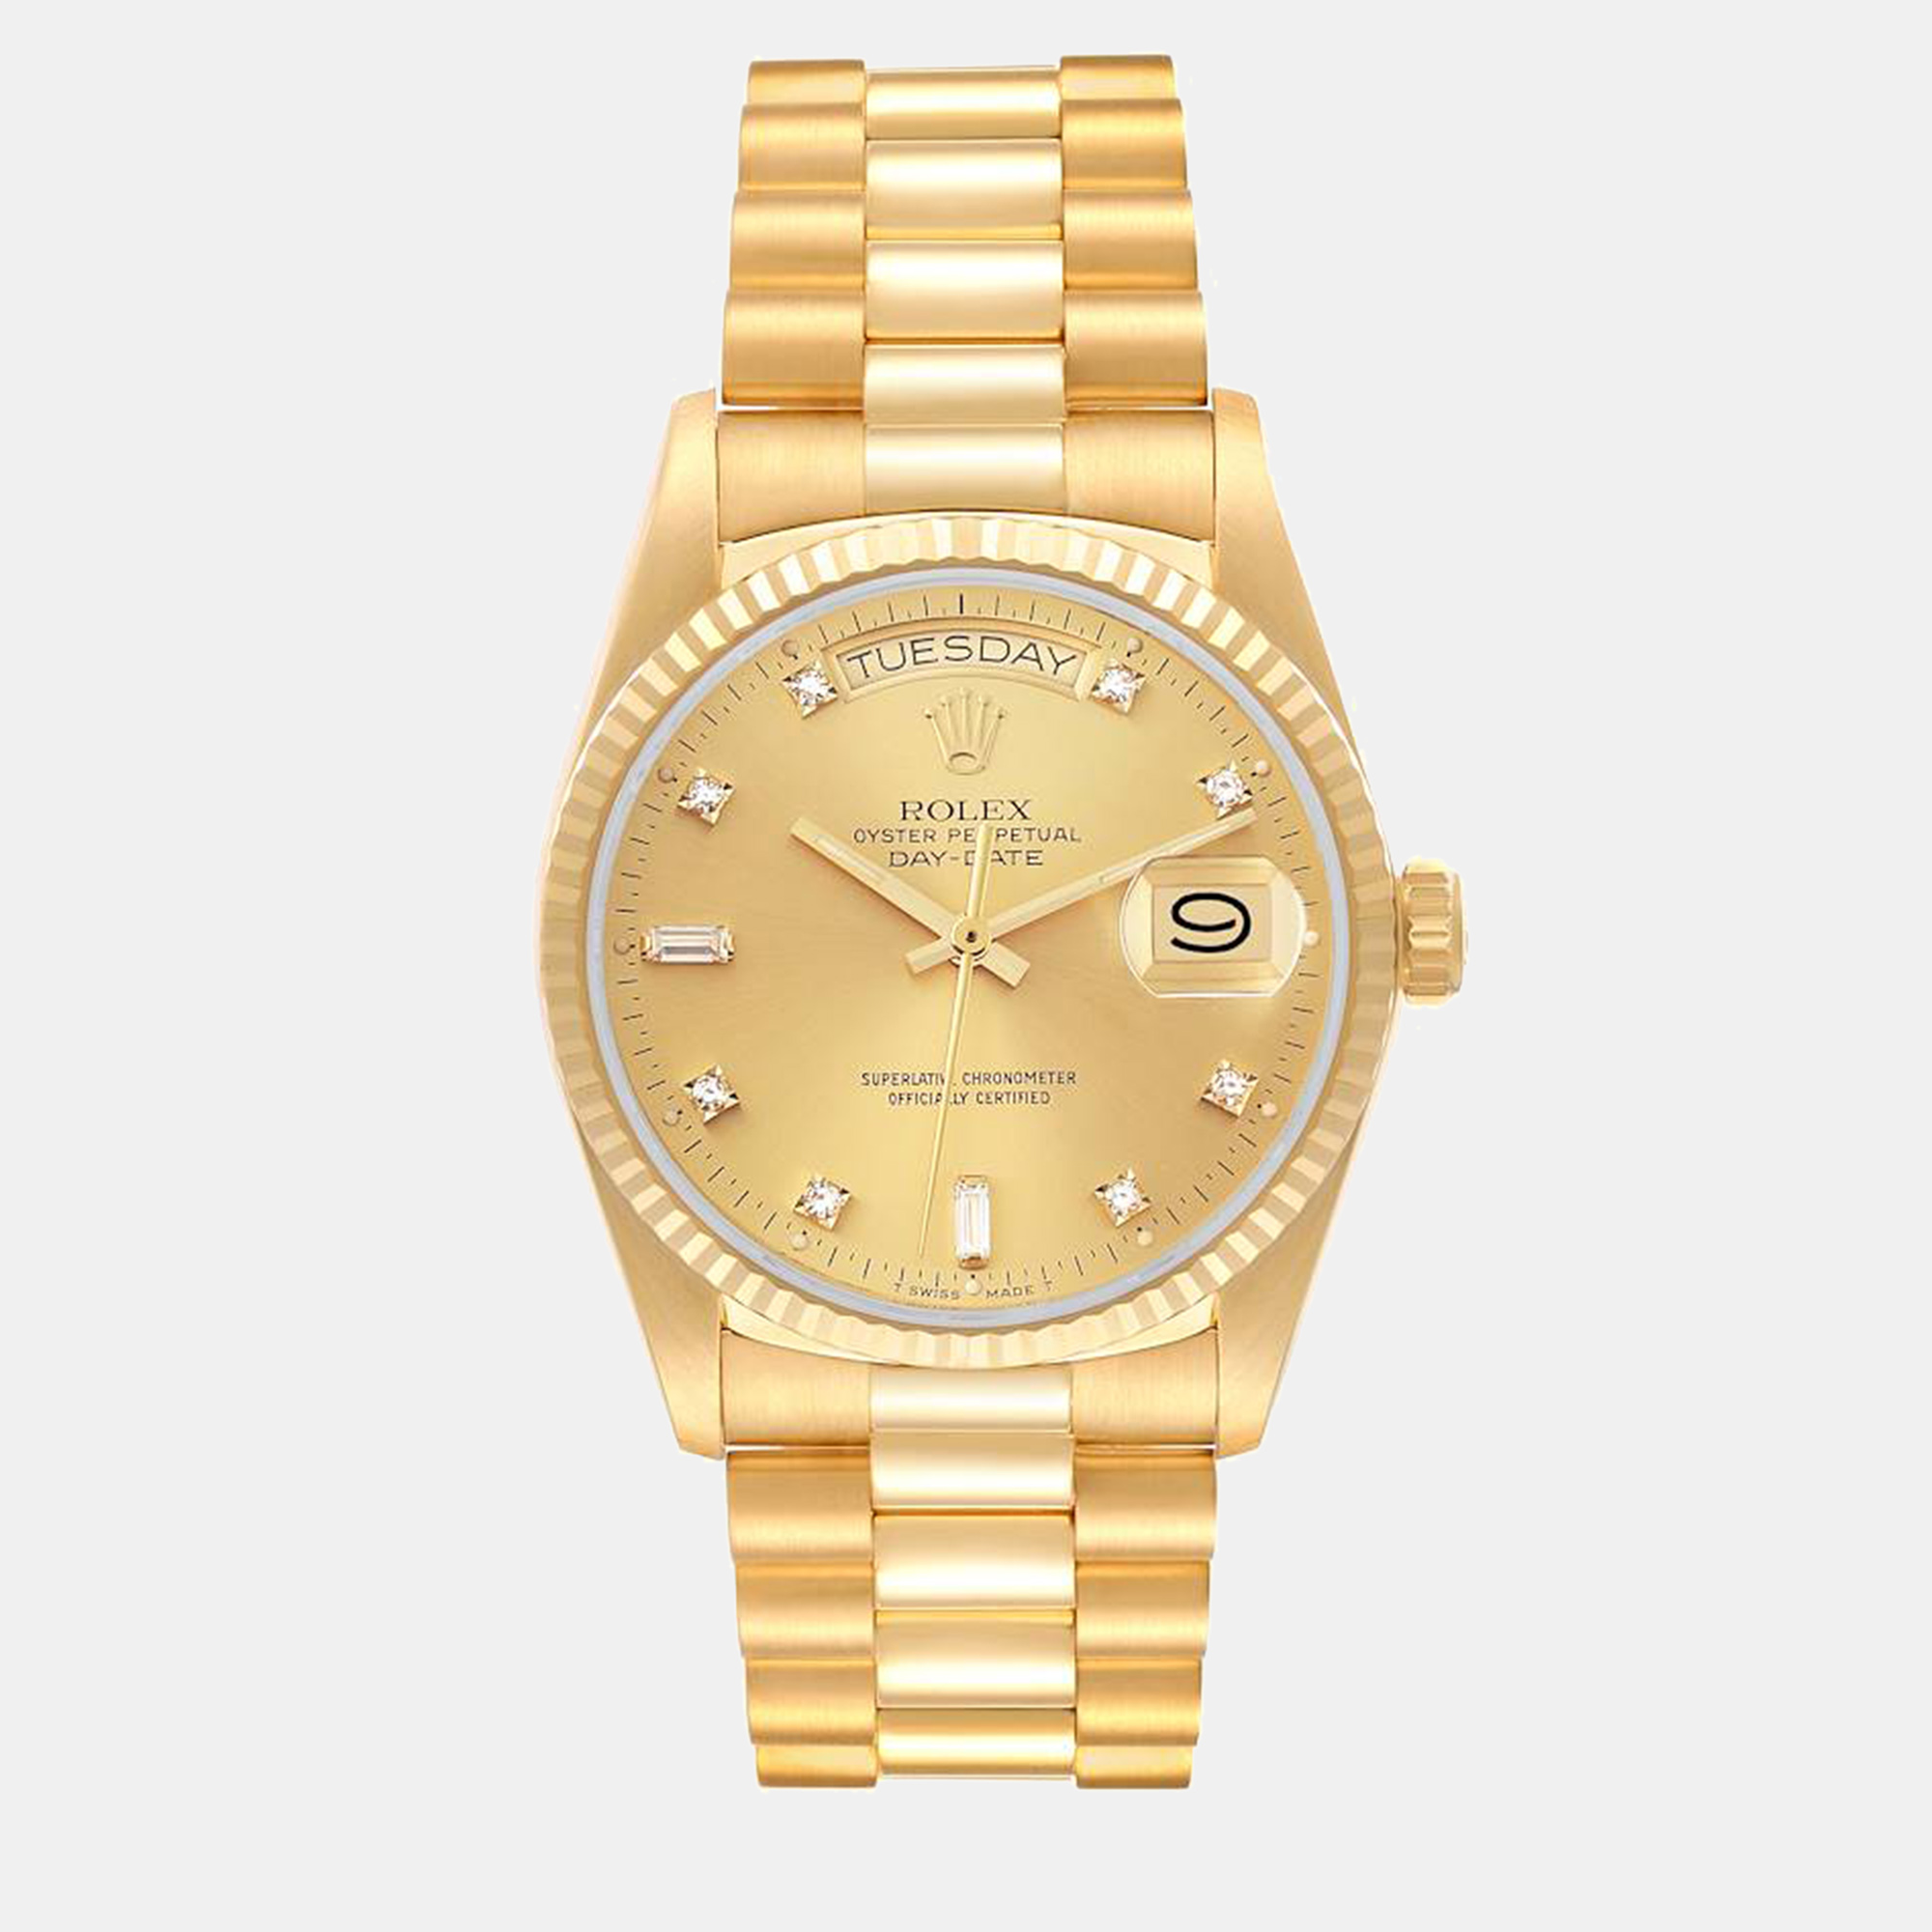 Rolex president day-date yellow gold diamond dial men's watch 18038 36 mm